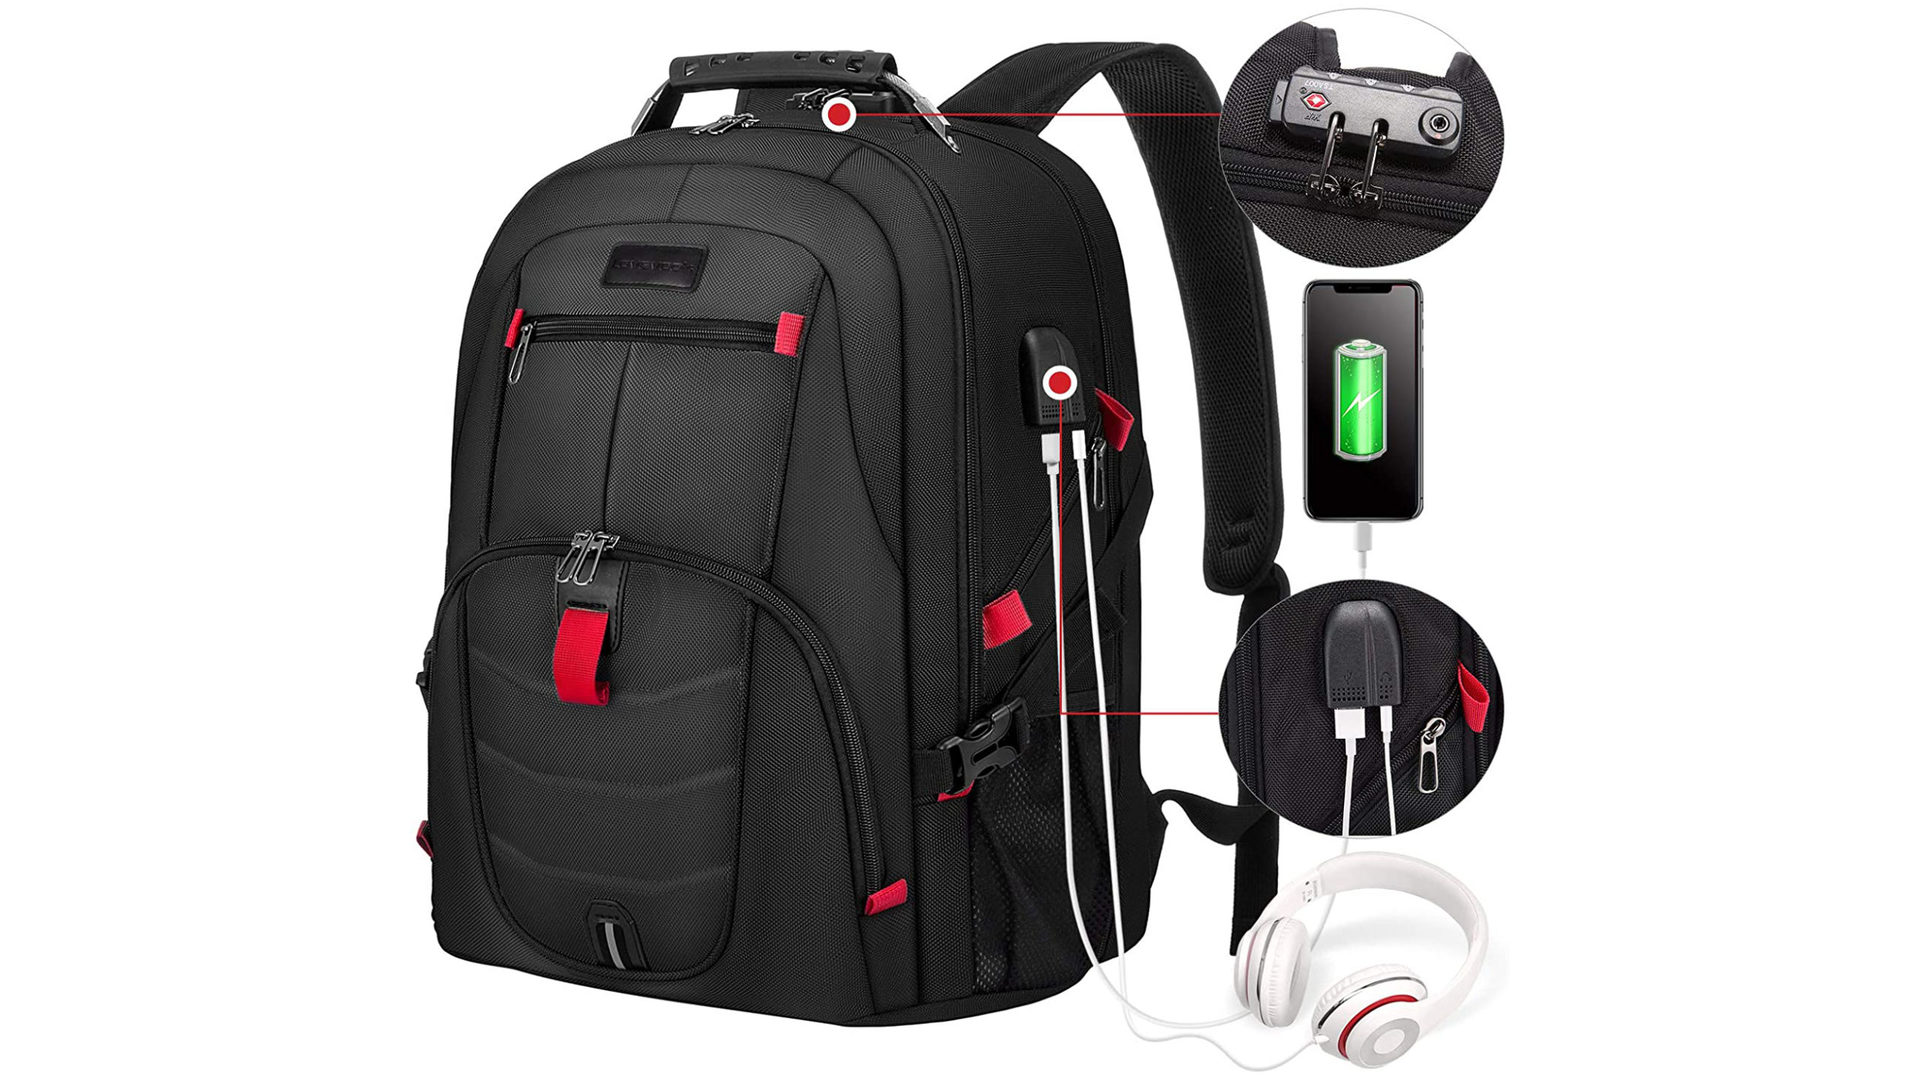 Lovevook Travel Laptop Backpack